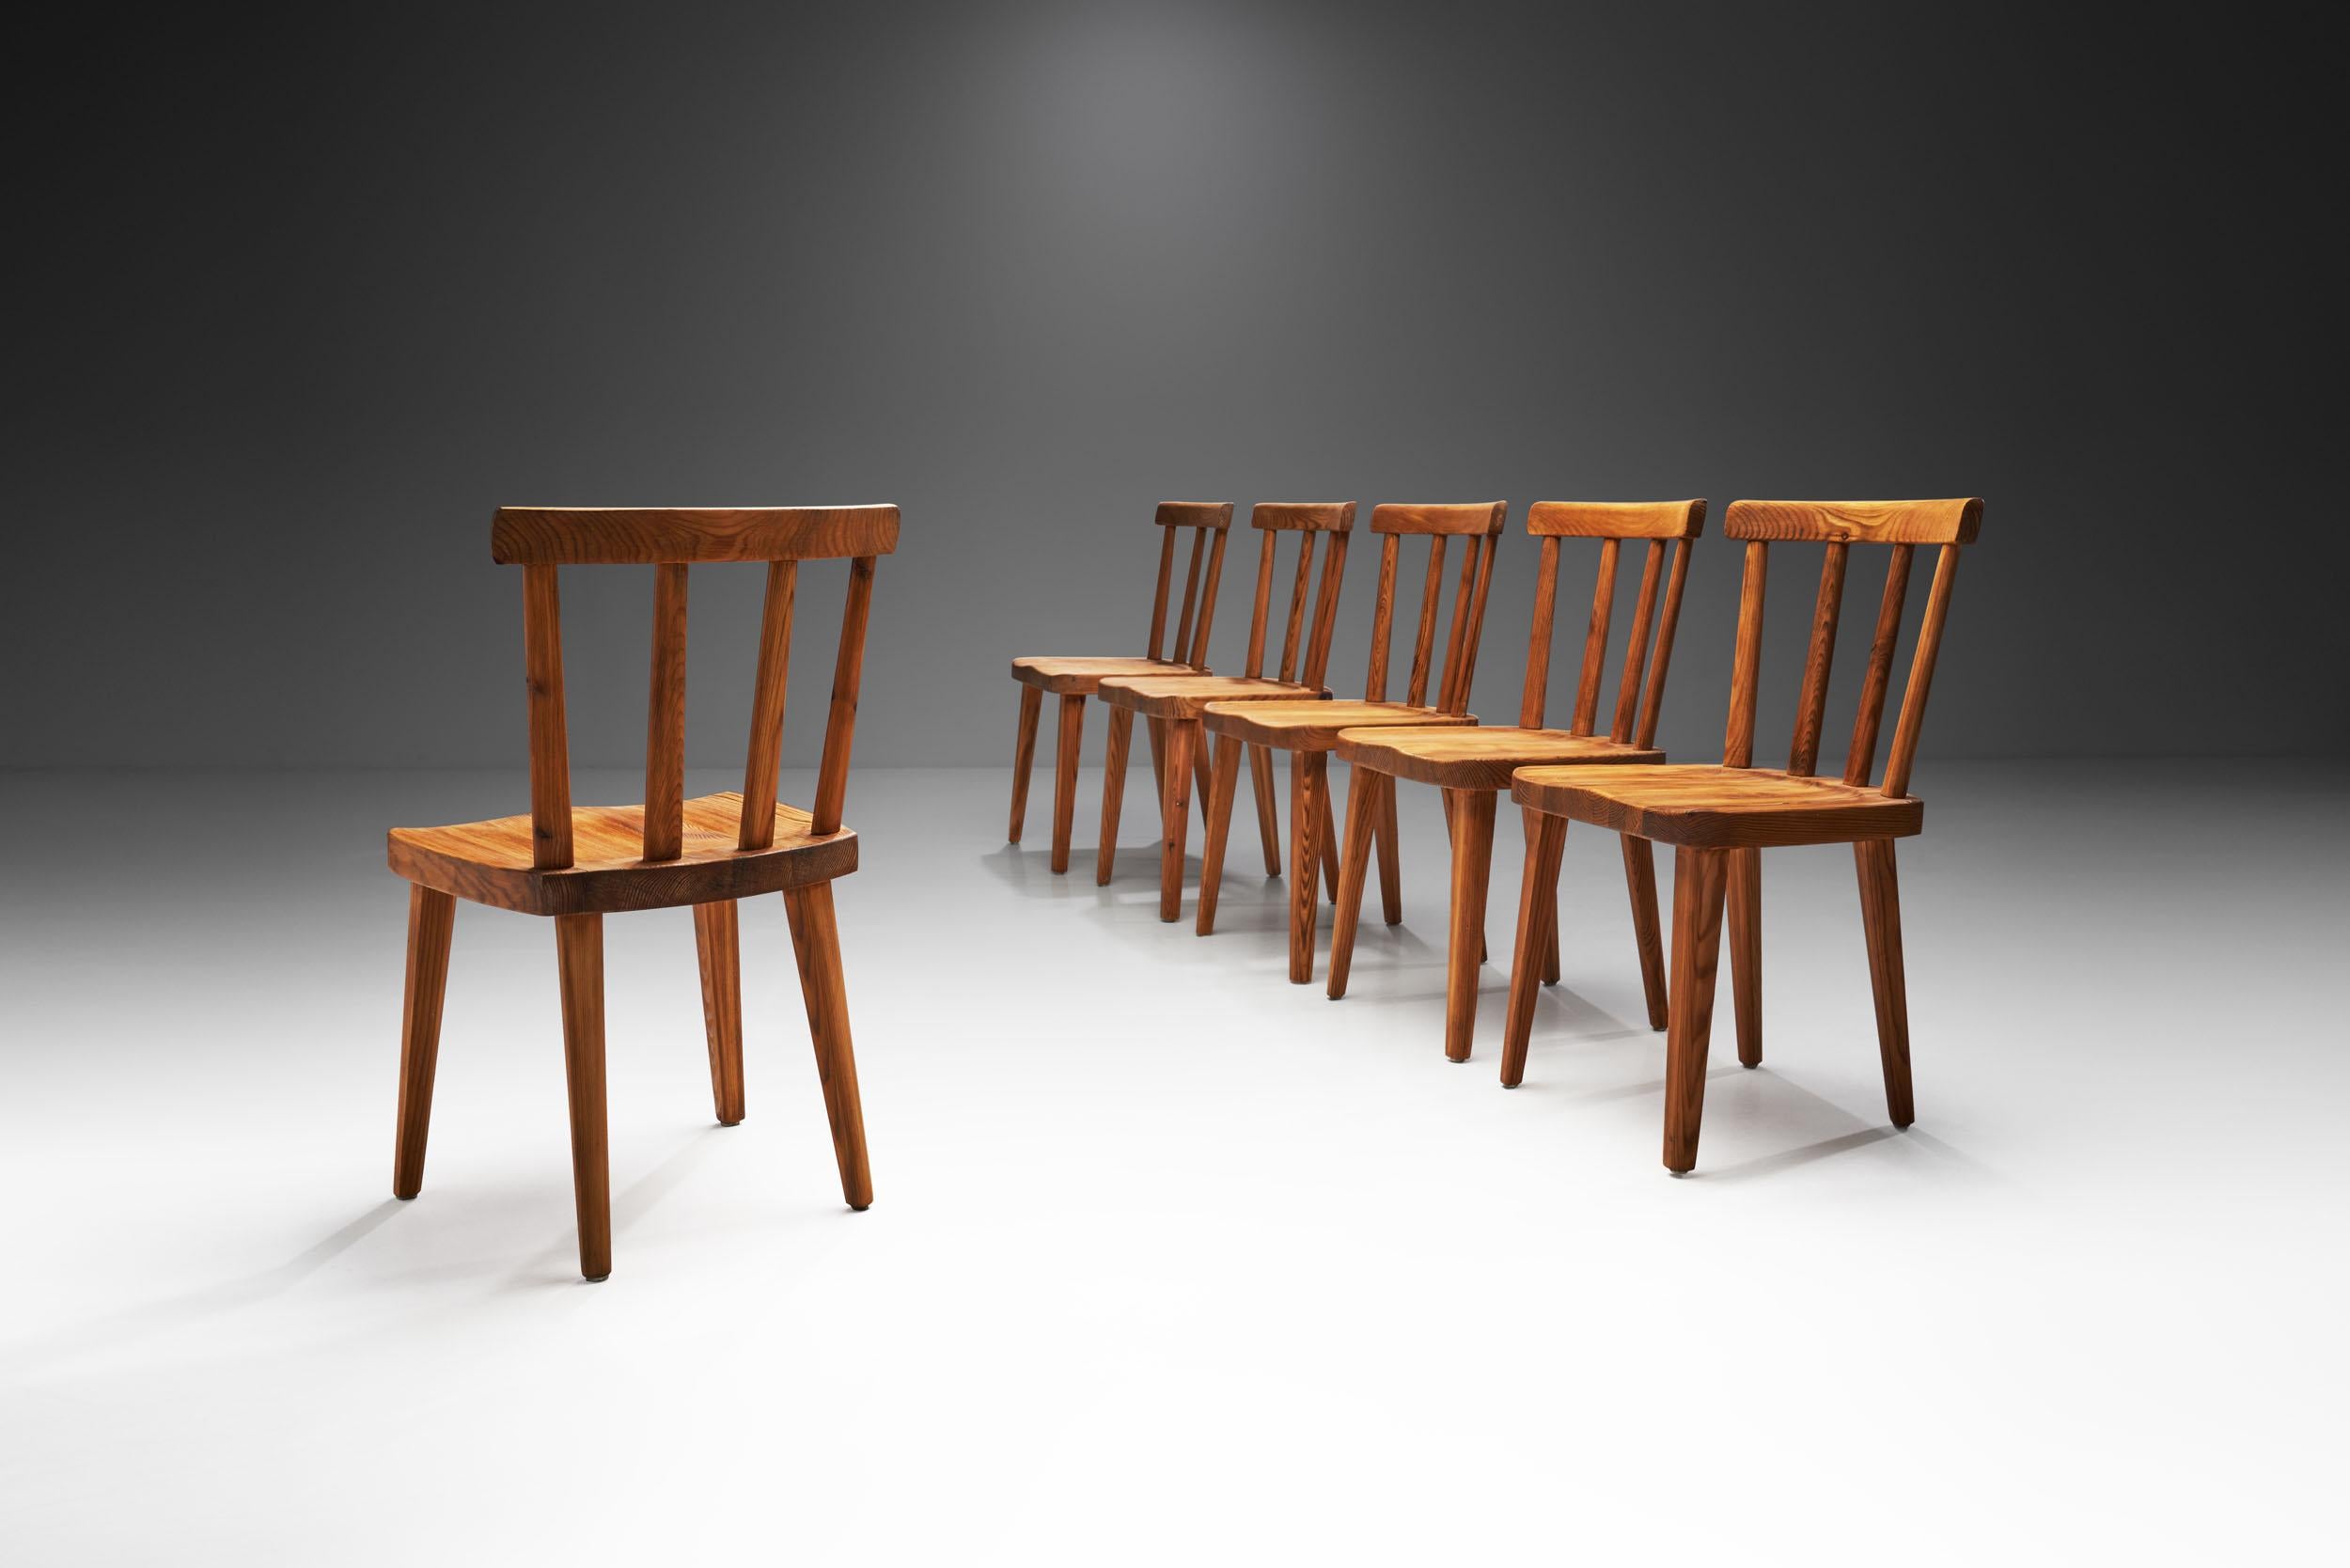 Scandinavian Modern Axel Einar Hjorth “Utö” Dining Chairs for Nordiska Kompaniet, Sweden 1930s